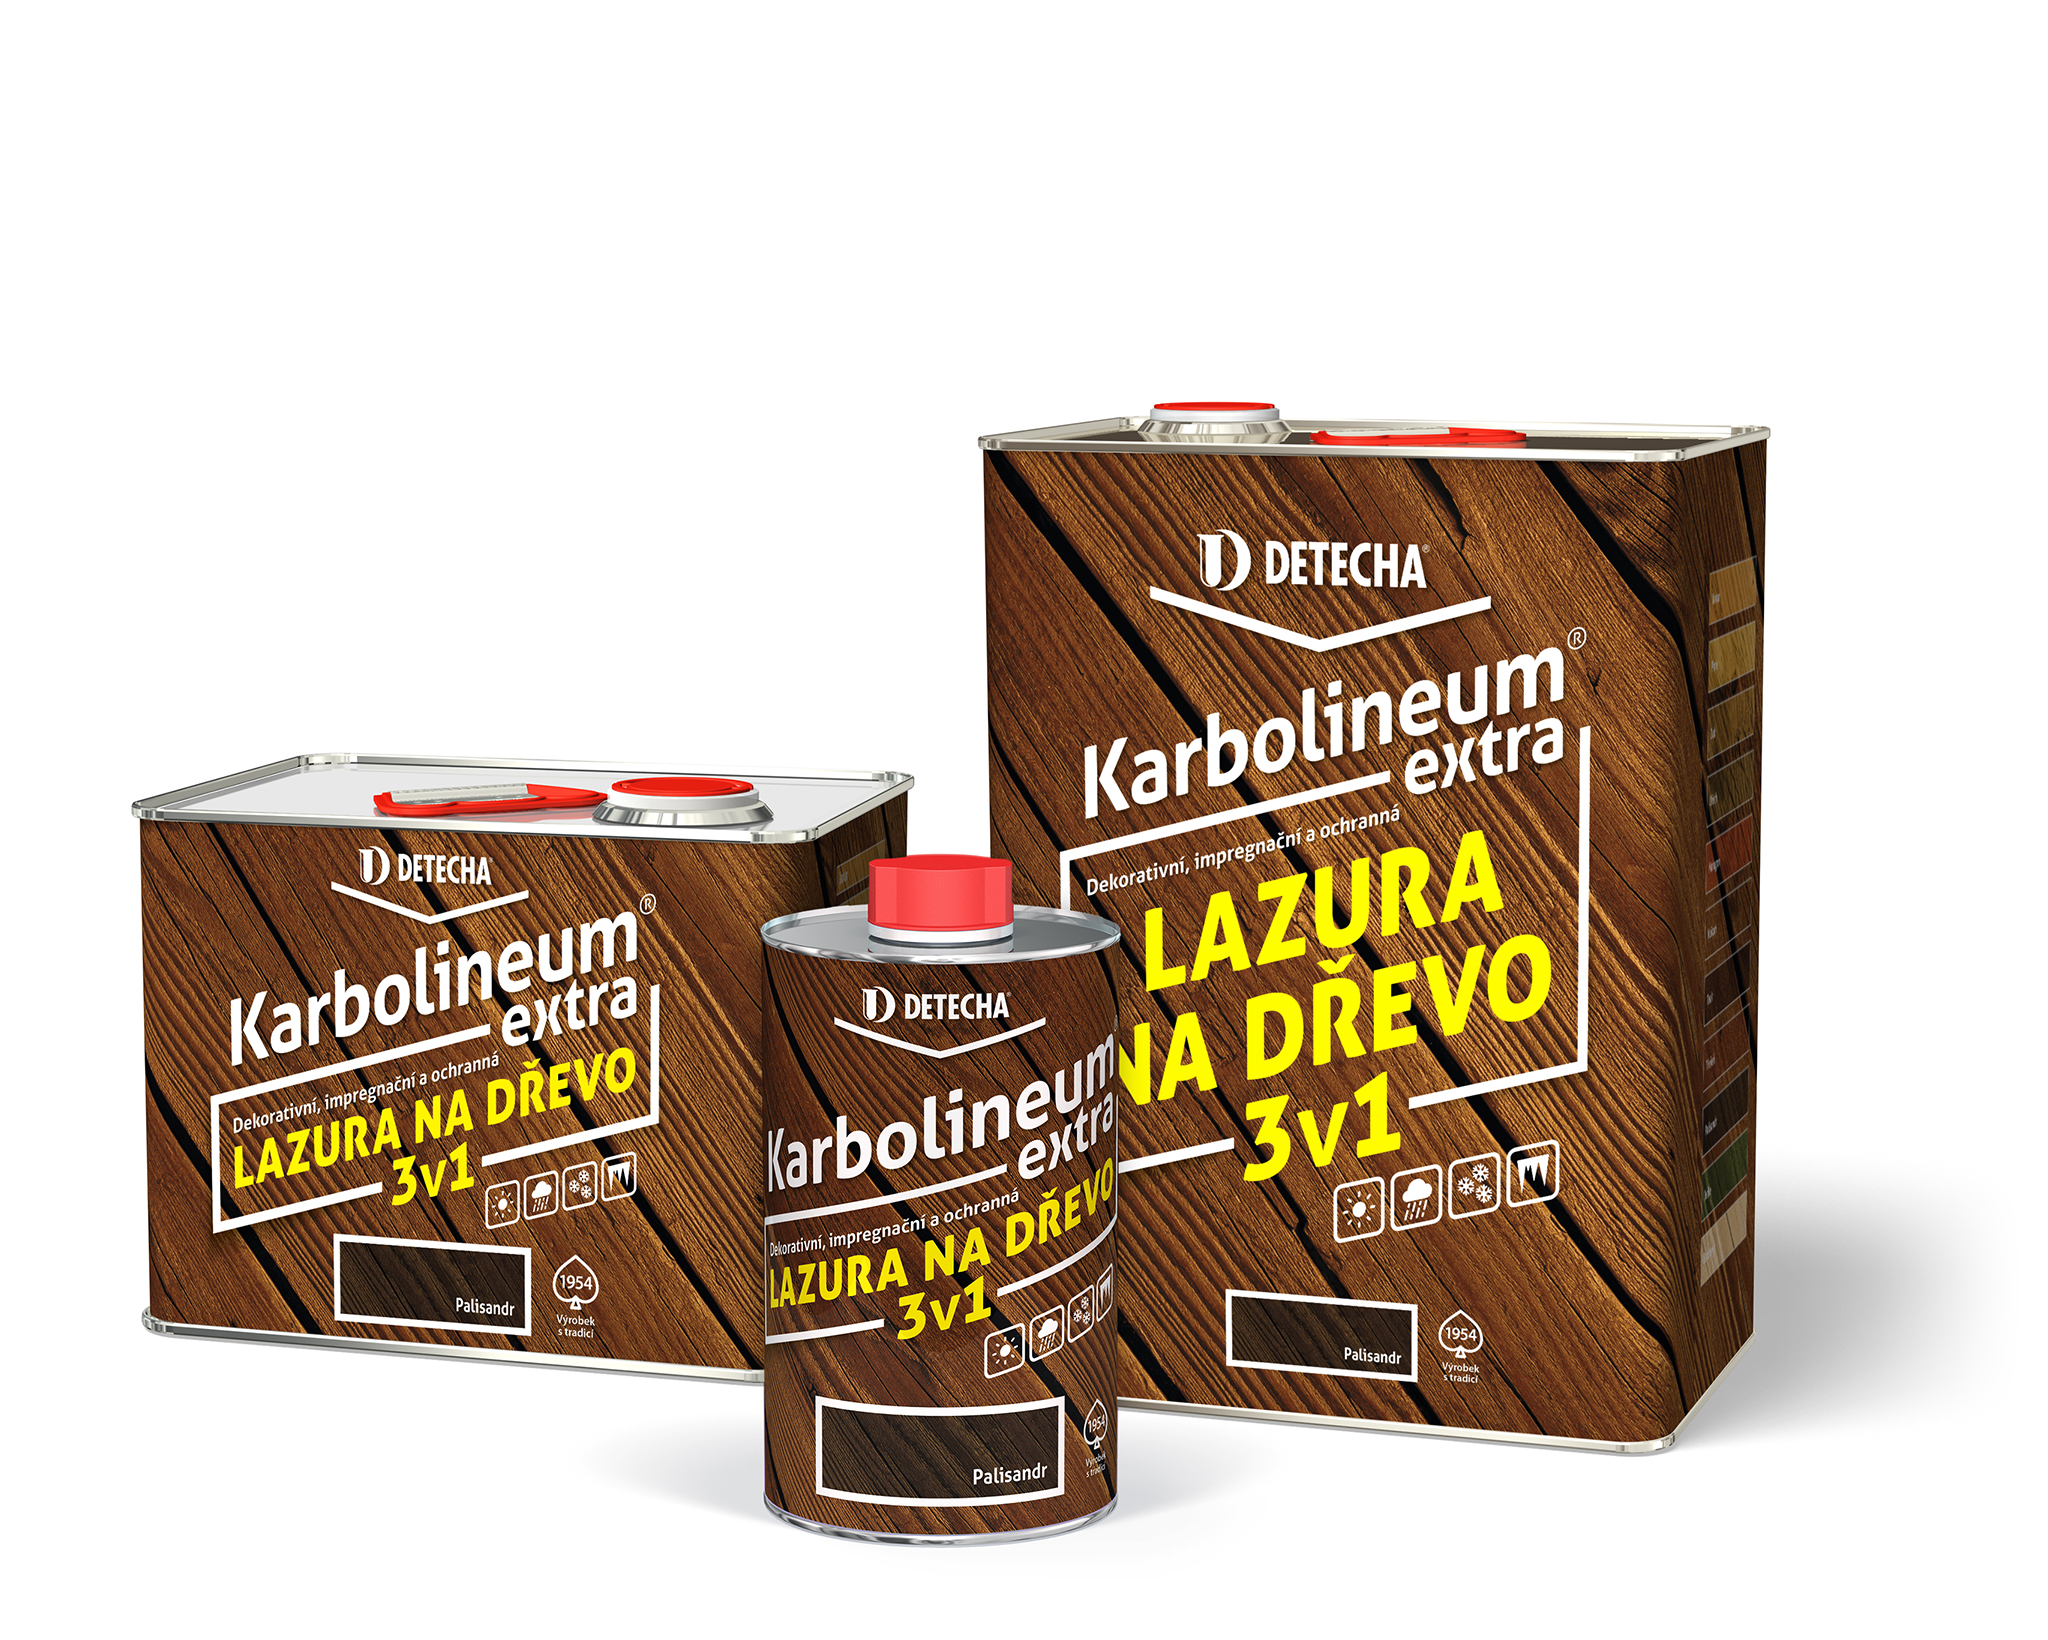 Detecha Karbolineum extra lazura na dřevo 3v1 3,5kg